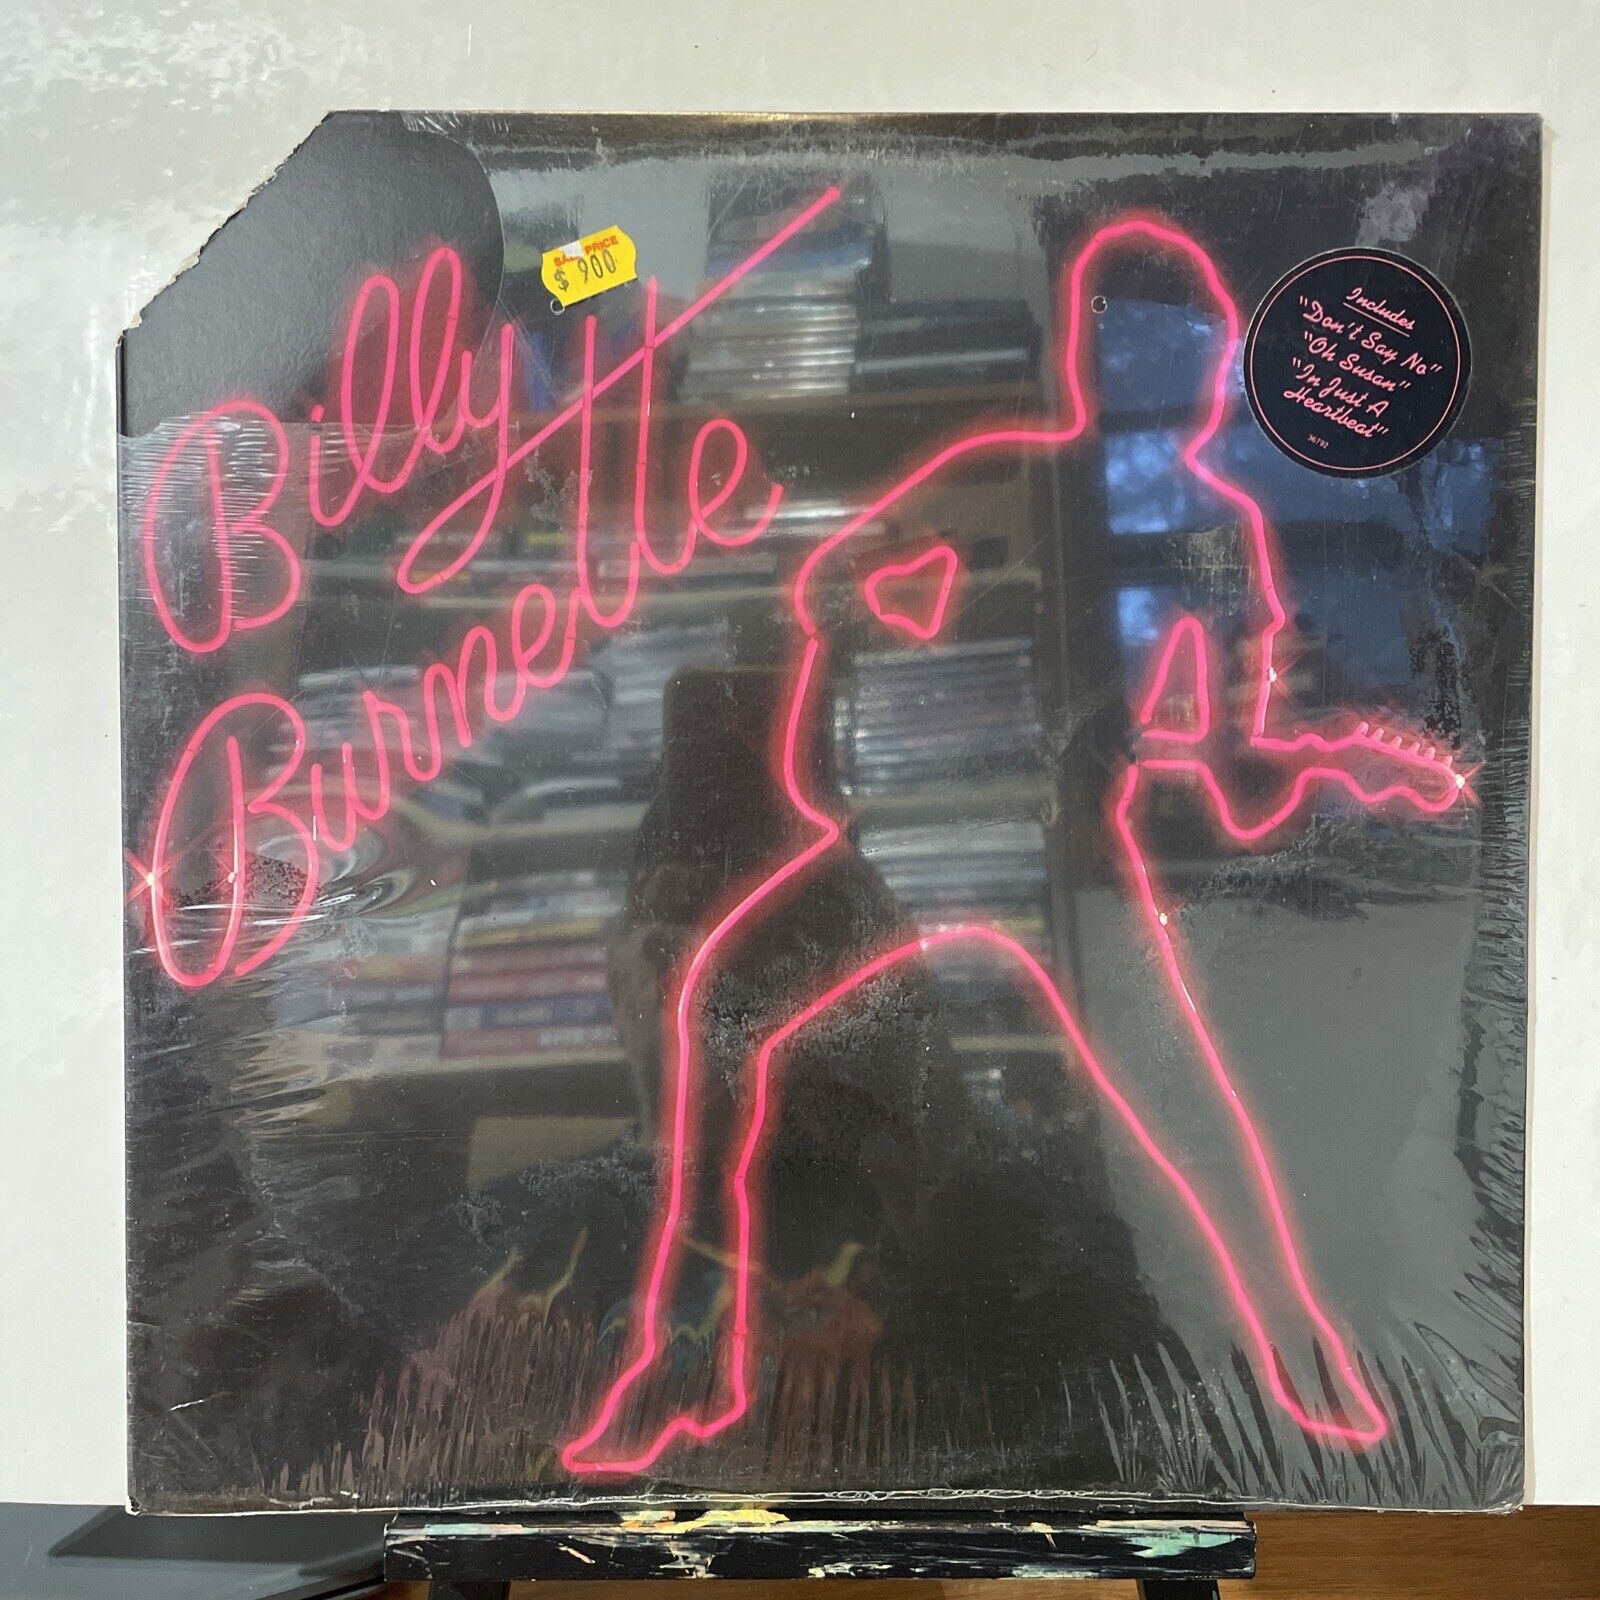 Billy Burnette by Billy Burnette (LP, Vinyl Record, 1980 CBS Records) Rockabilly